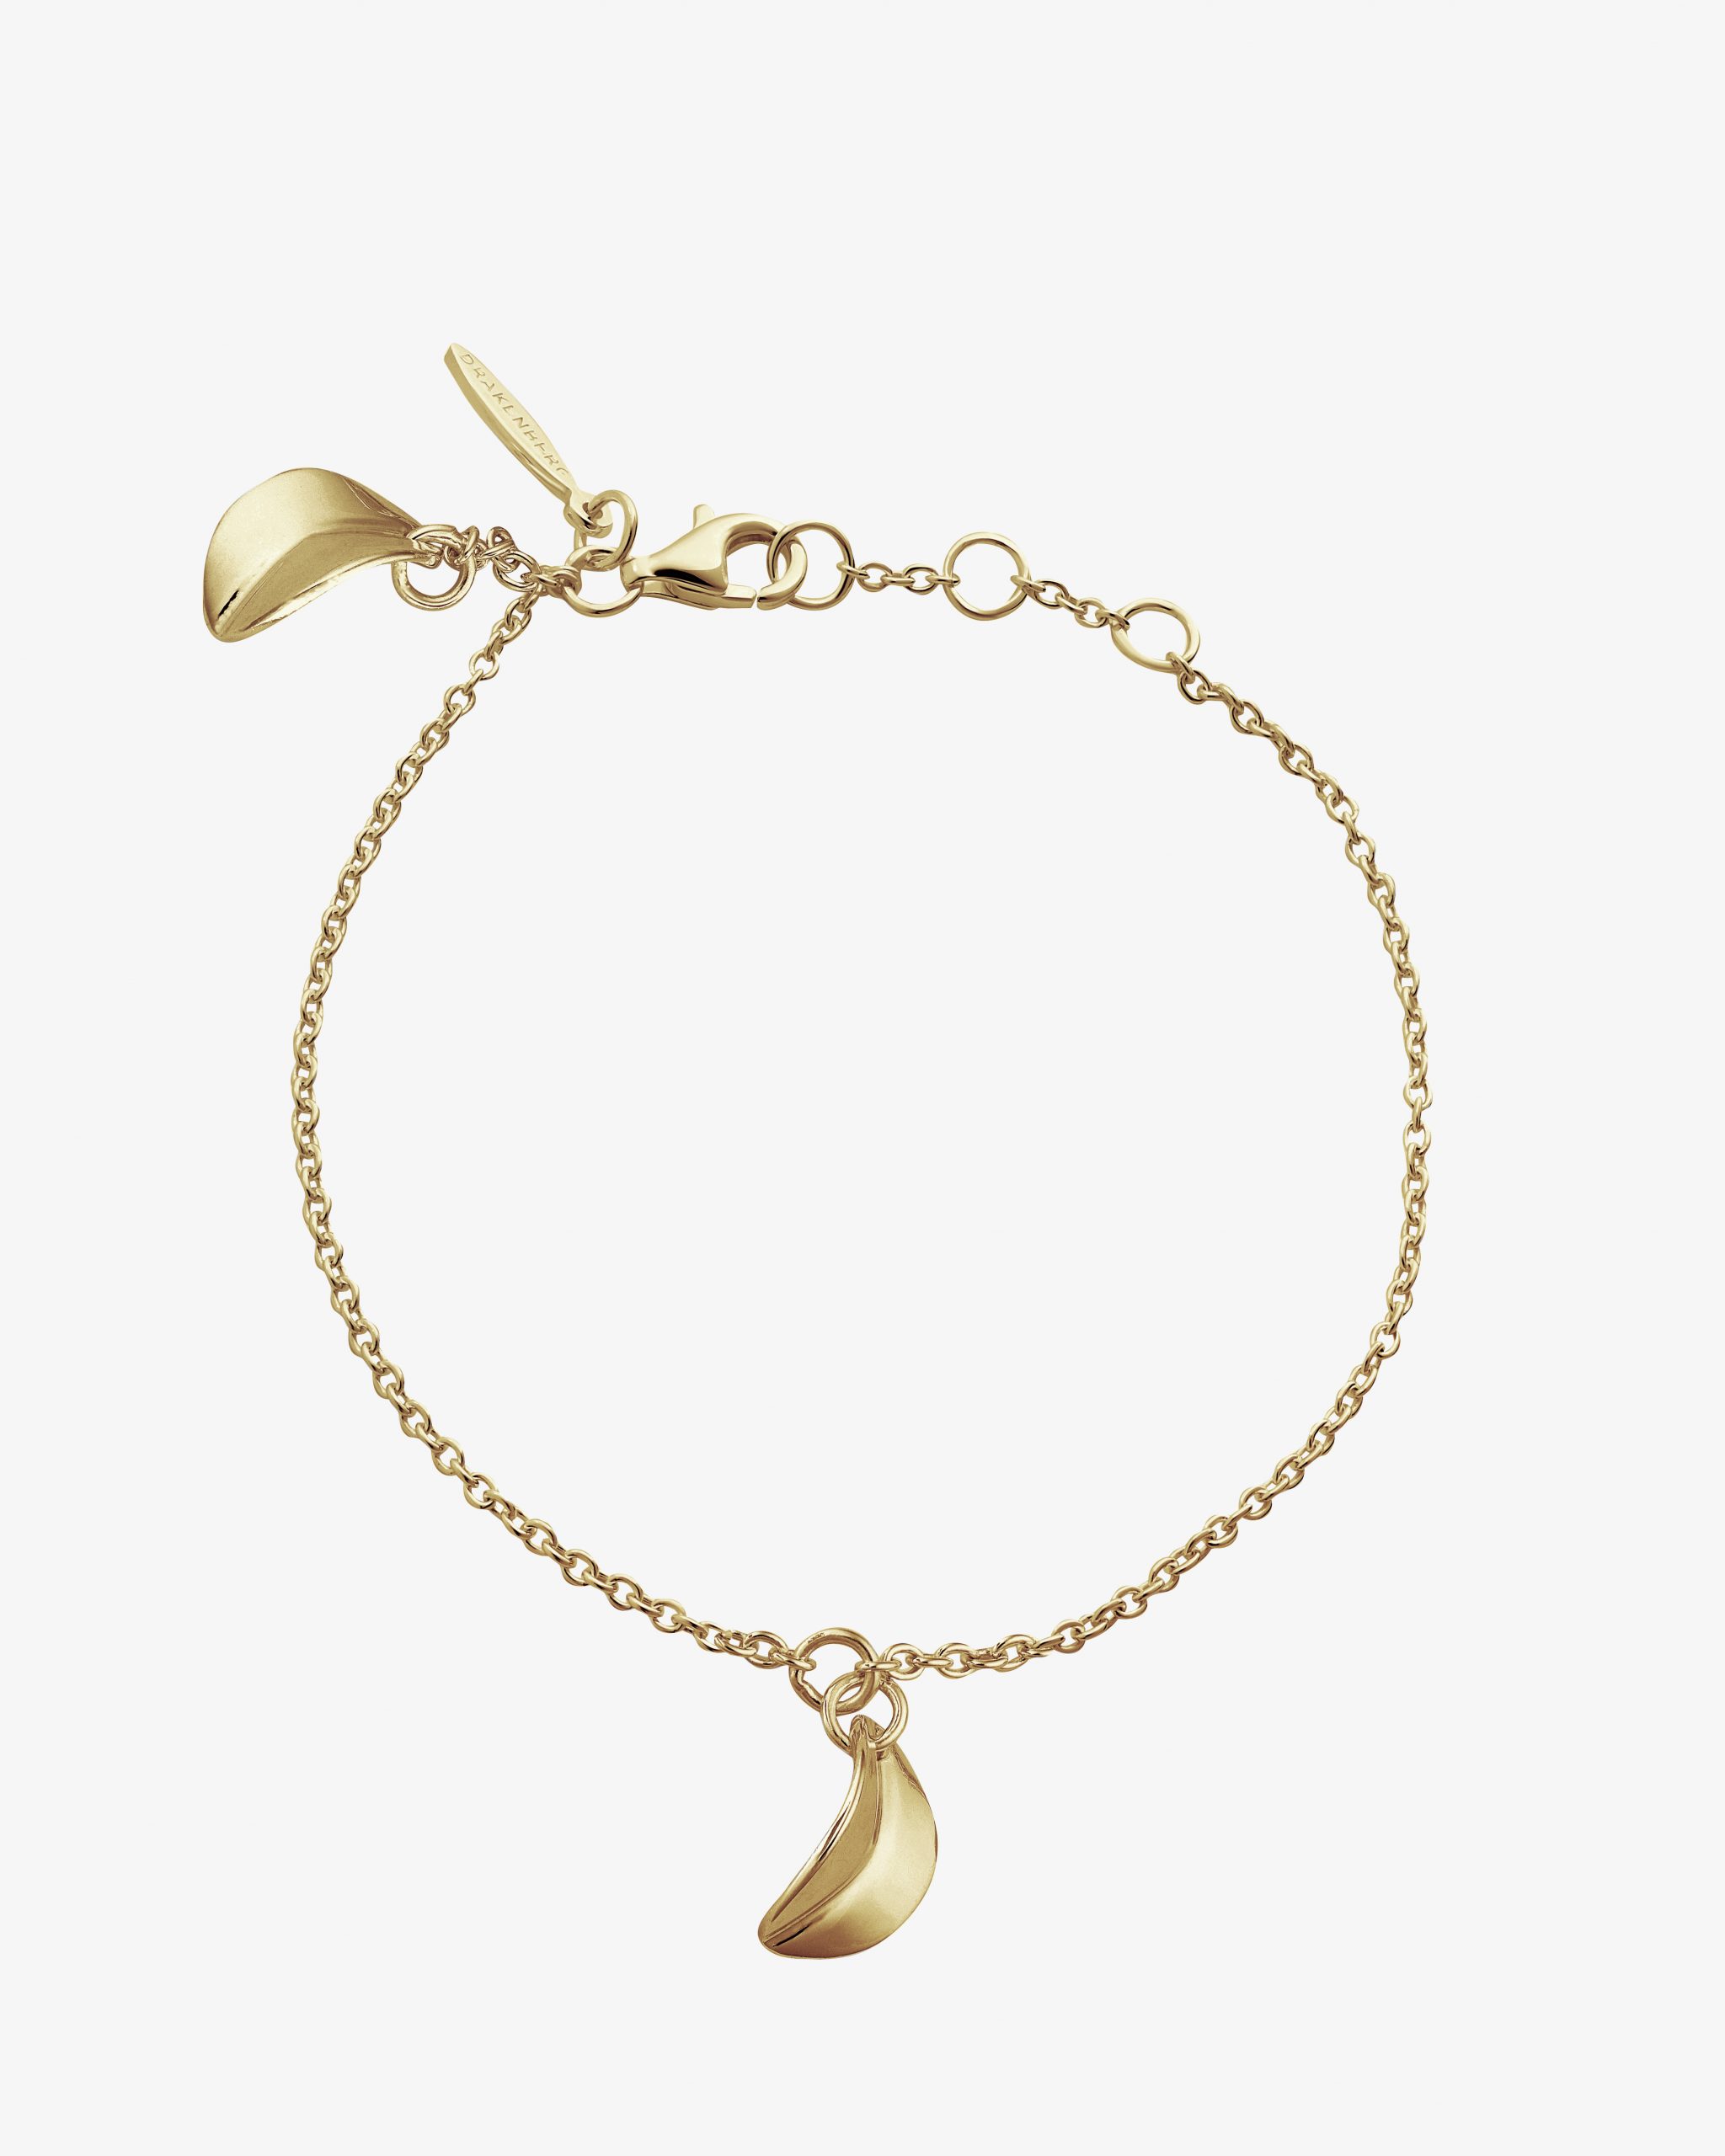 Botanica drop bracelet gold